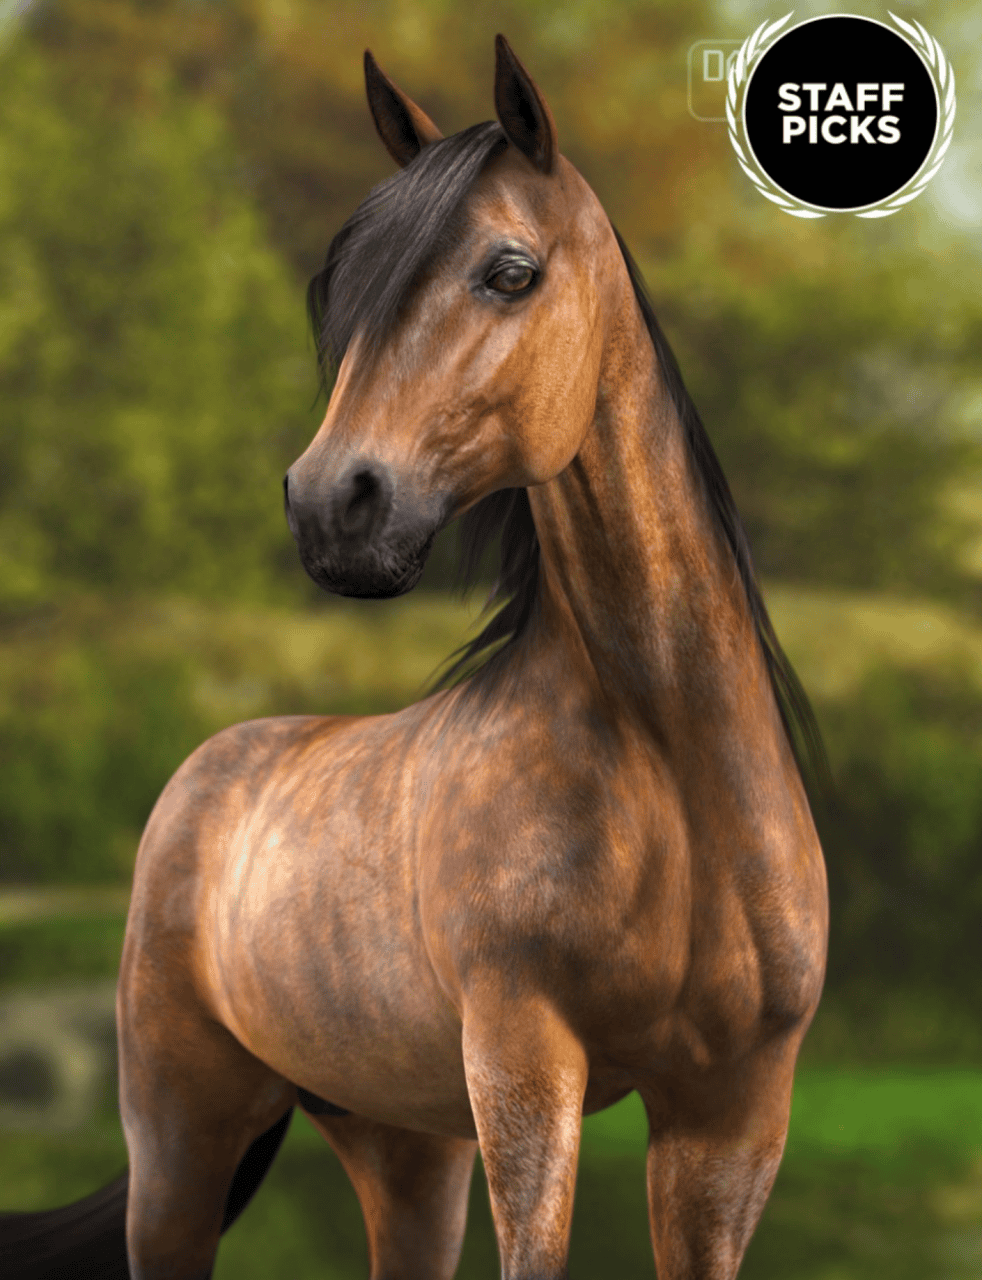 3d model of a horse for daz studio